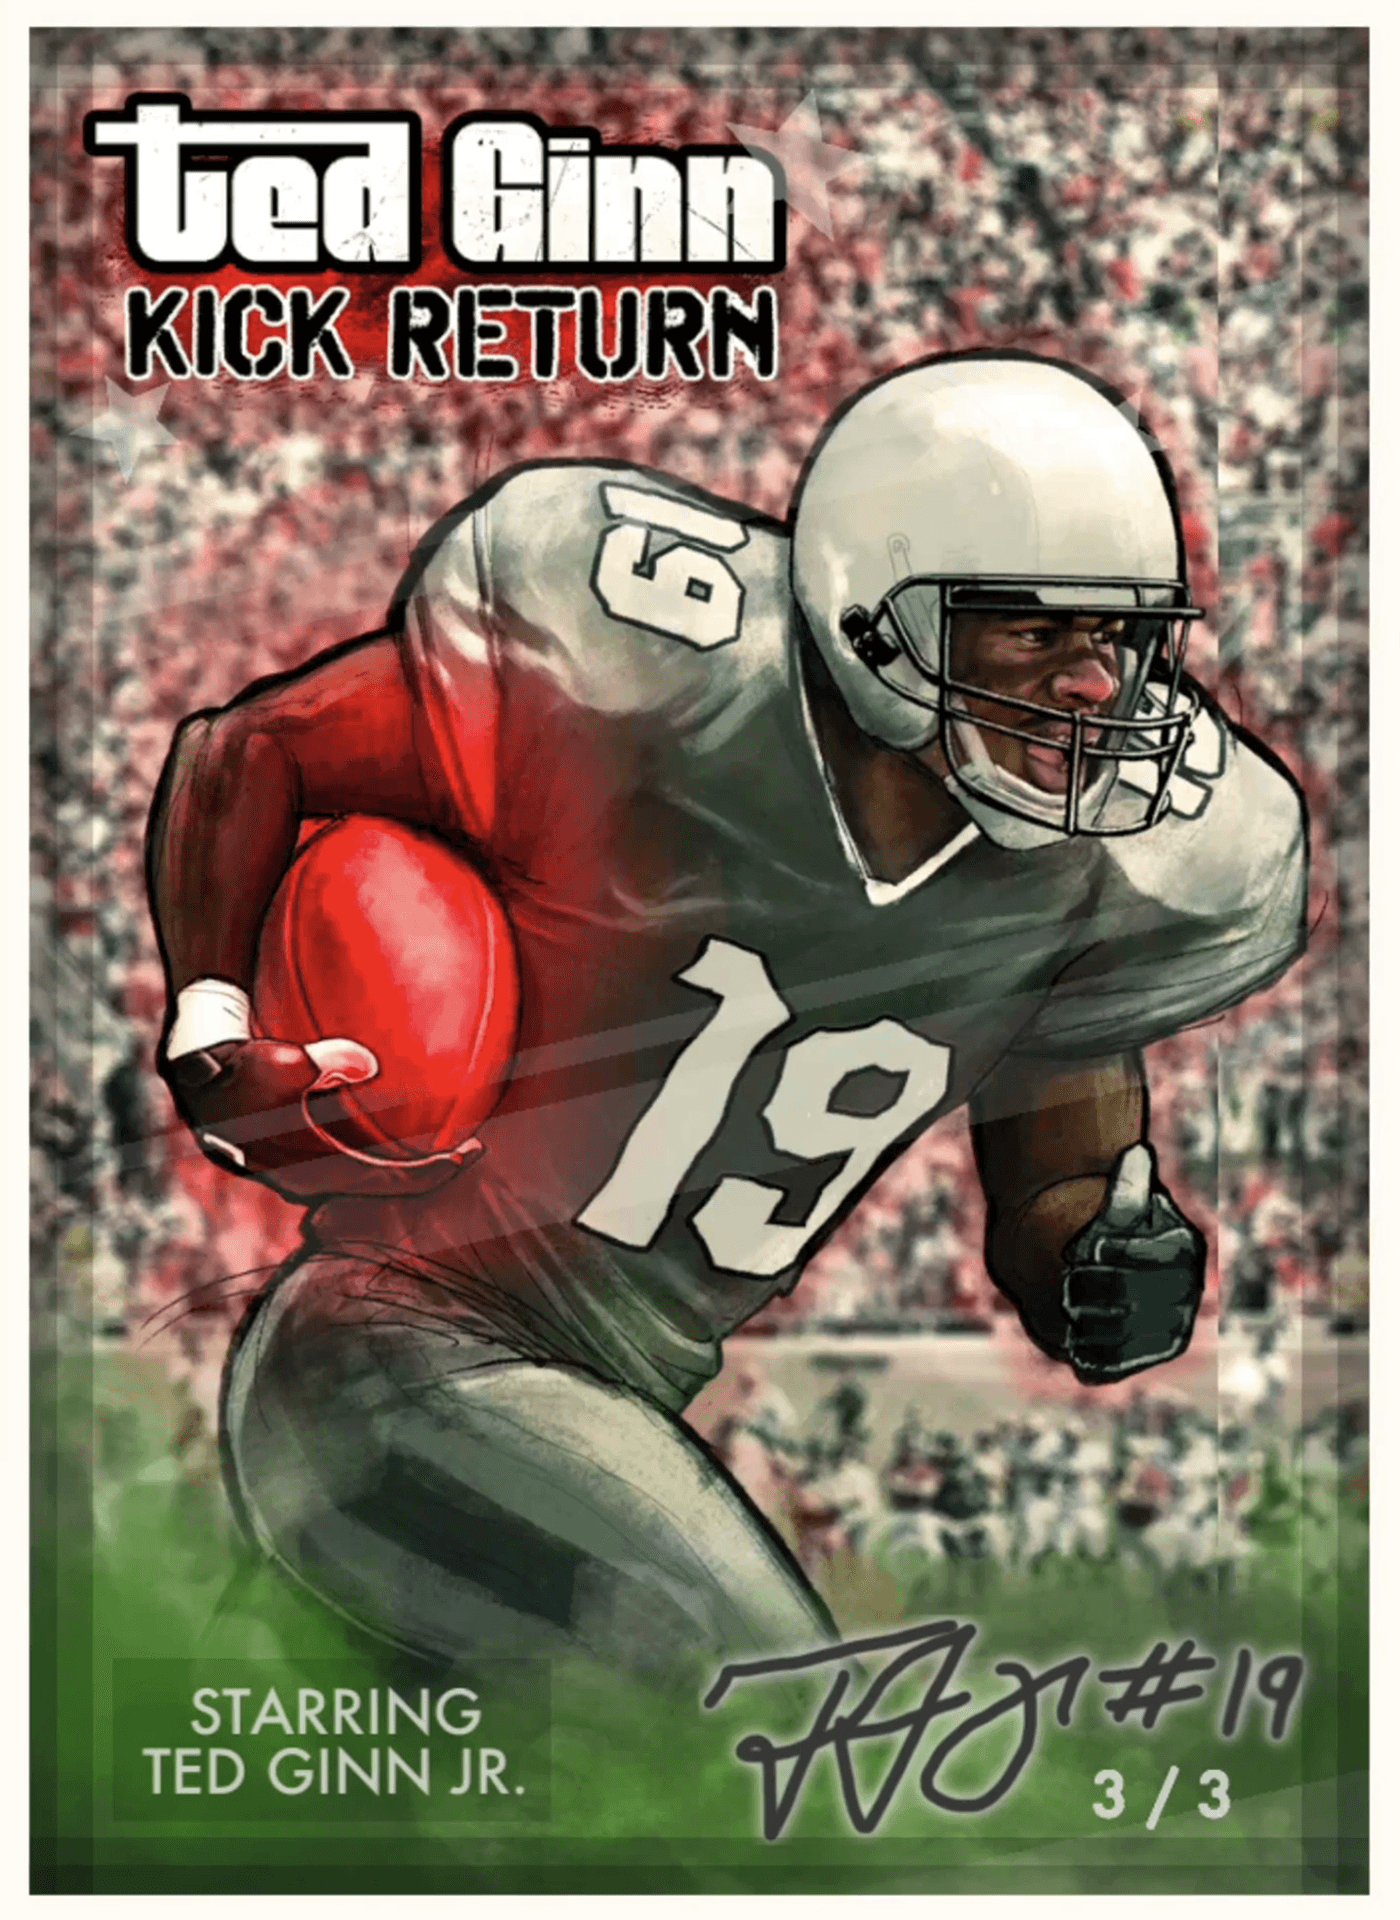 Ted Ginn: Kick Return - Pro Career (Edition 3/3)